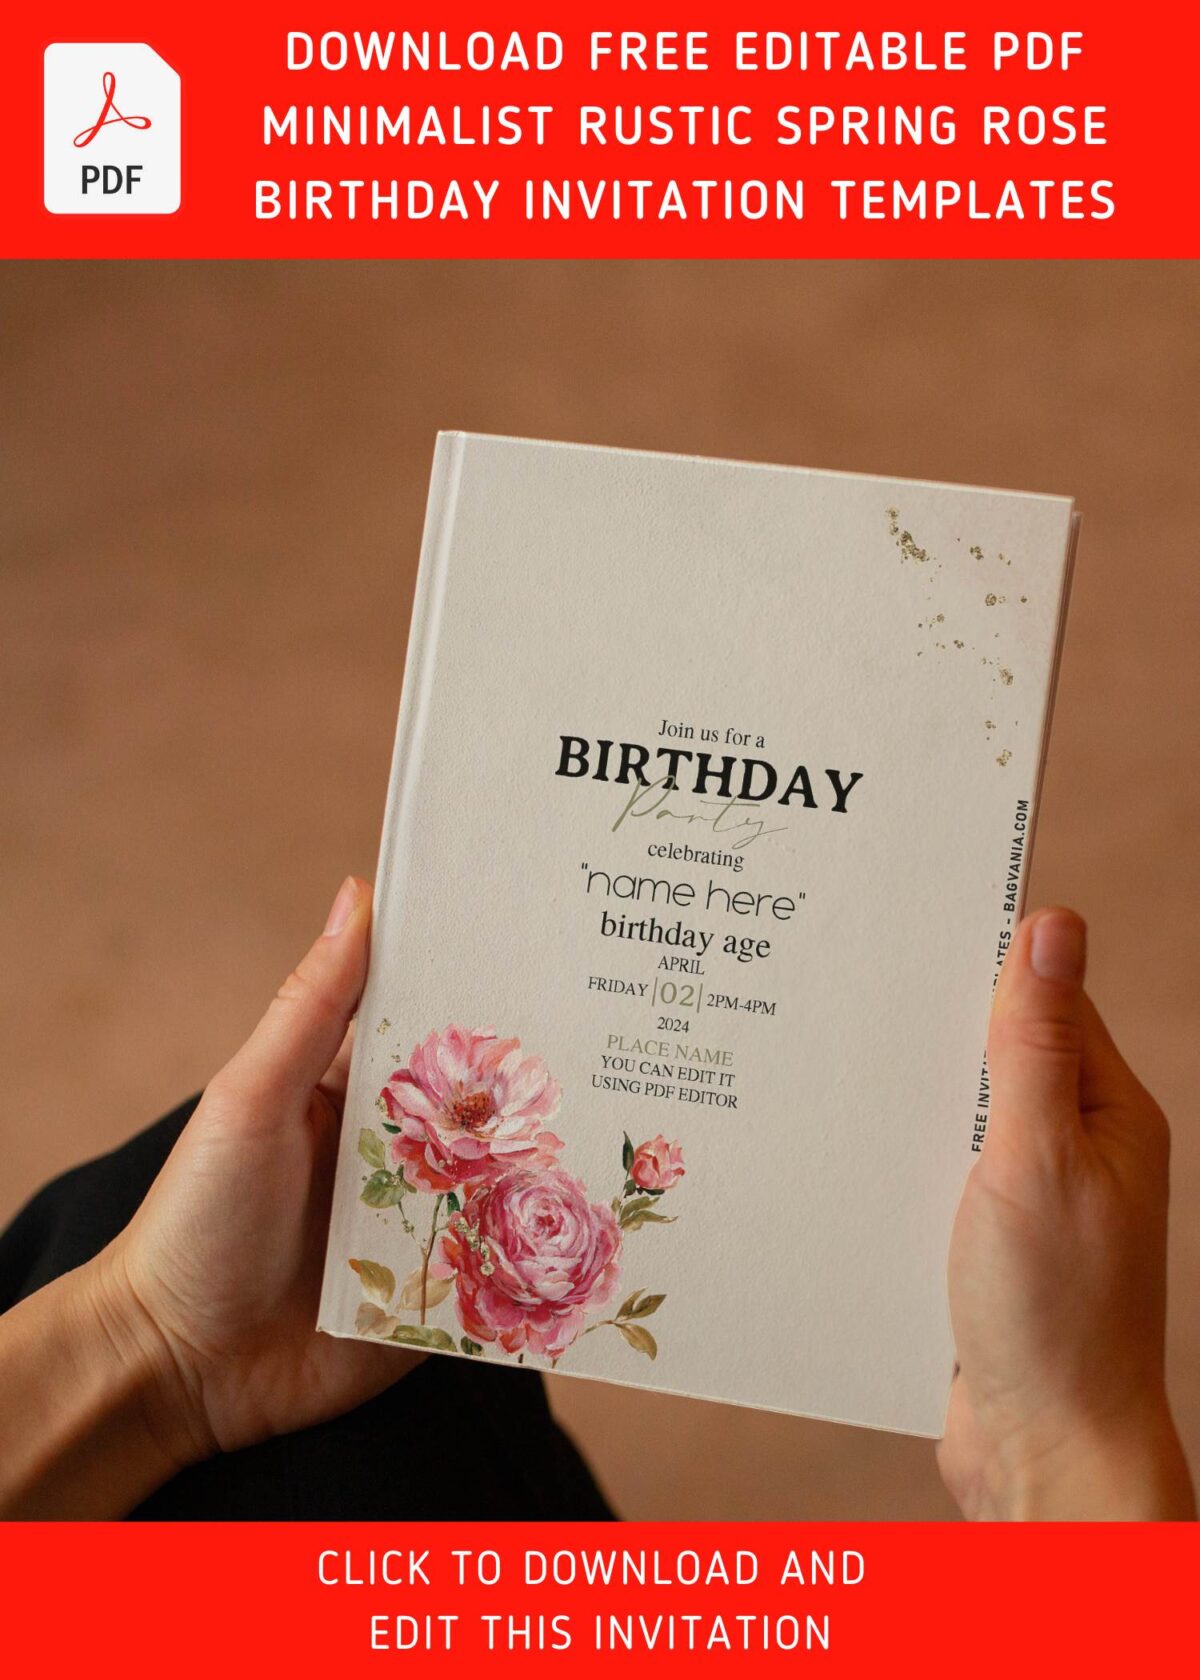 (Free Editable PDF) Minimalist Spring Rose And Peony Birthday Invitation Templates with editable text